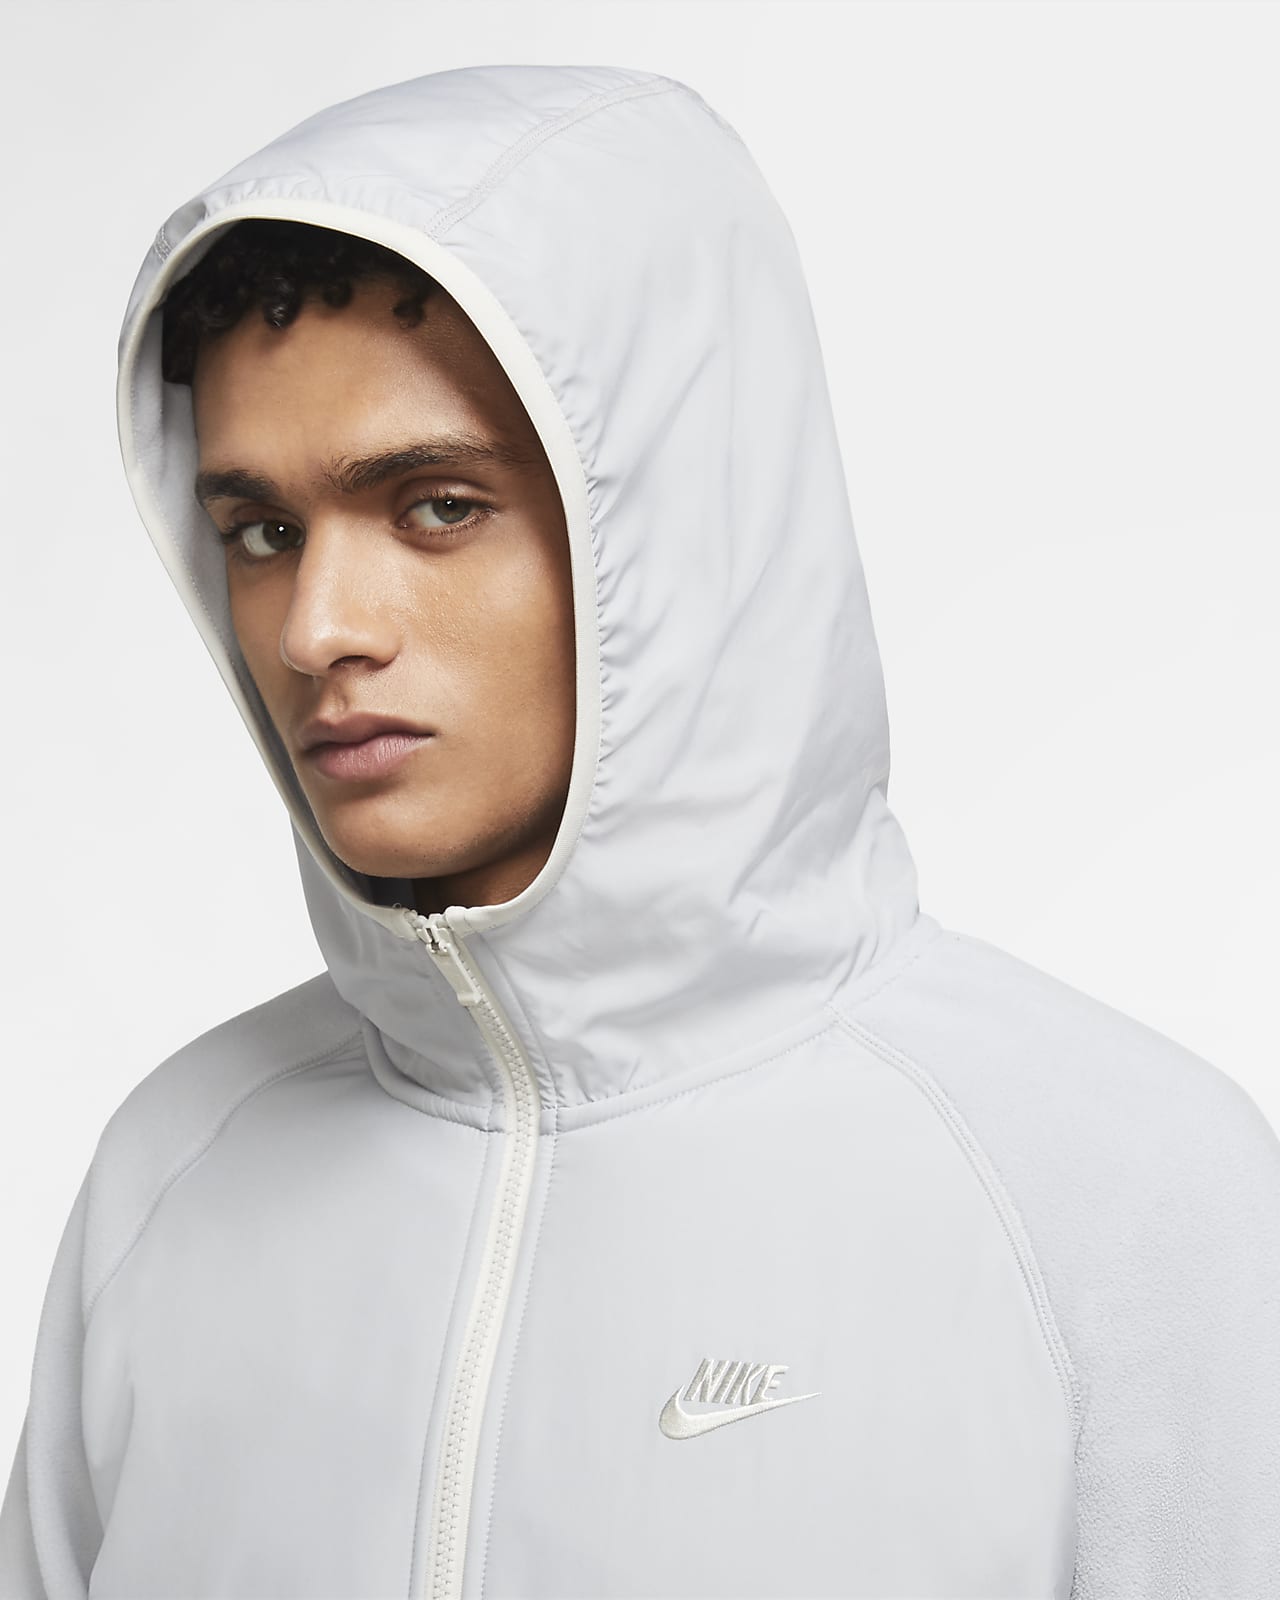 Nike Sportswear Men's Full-Zip Hoodie 